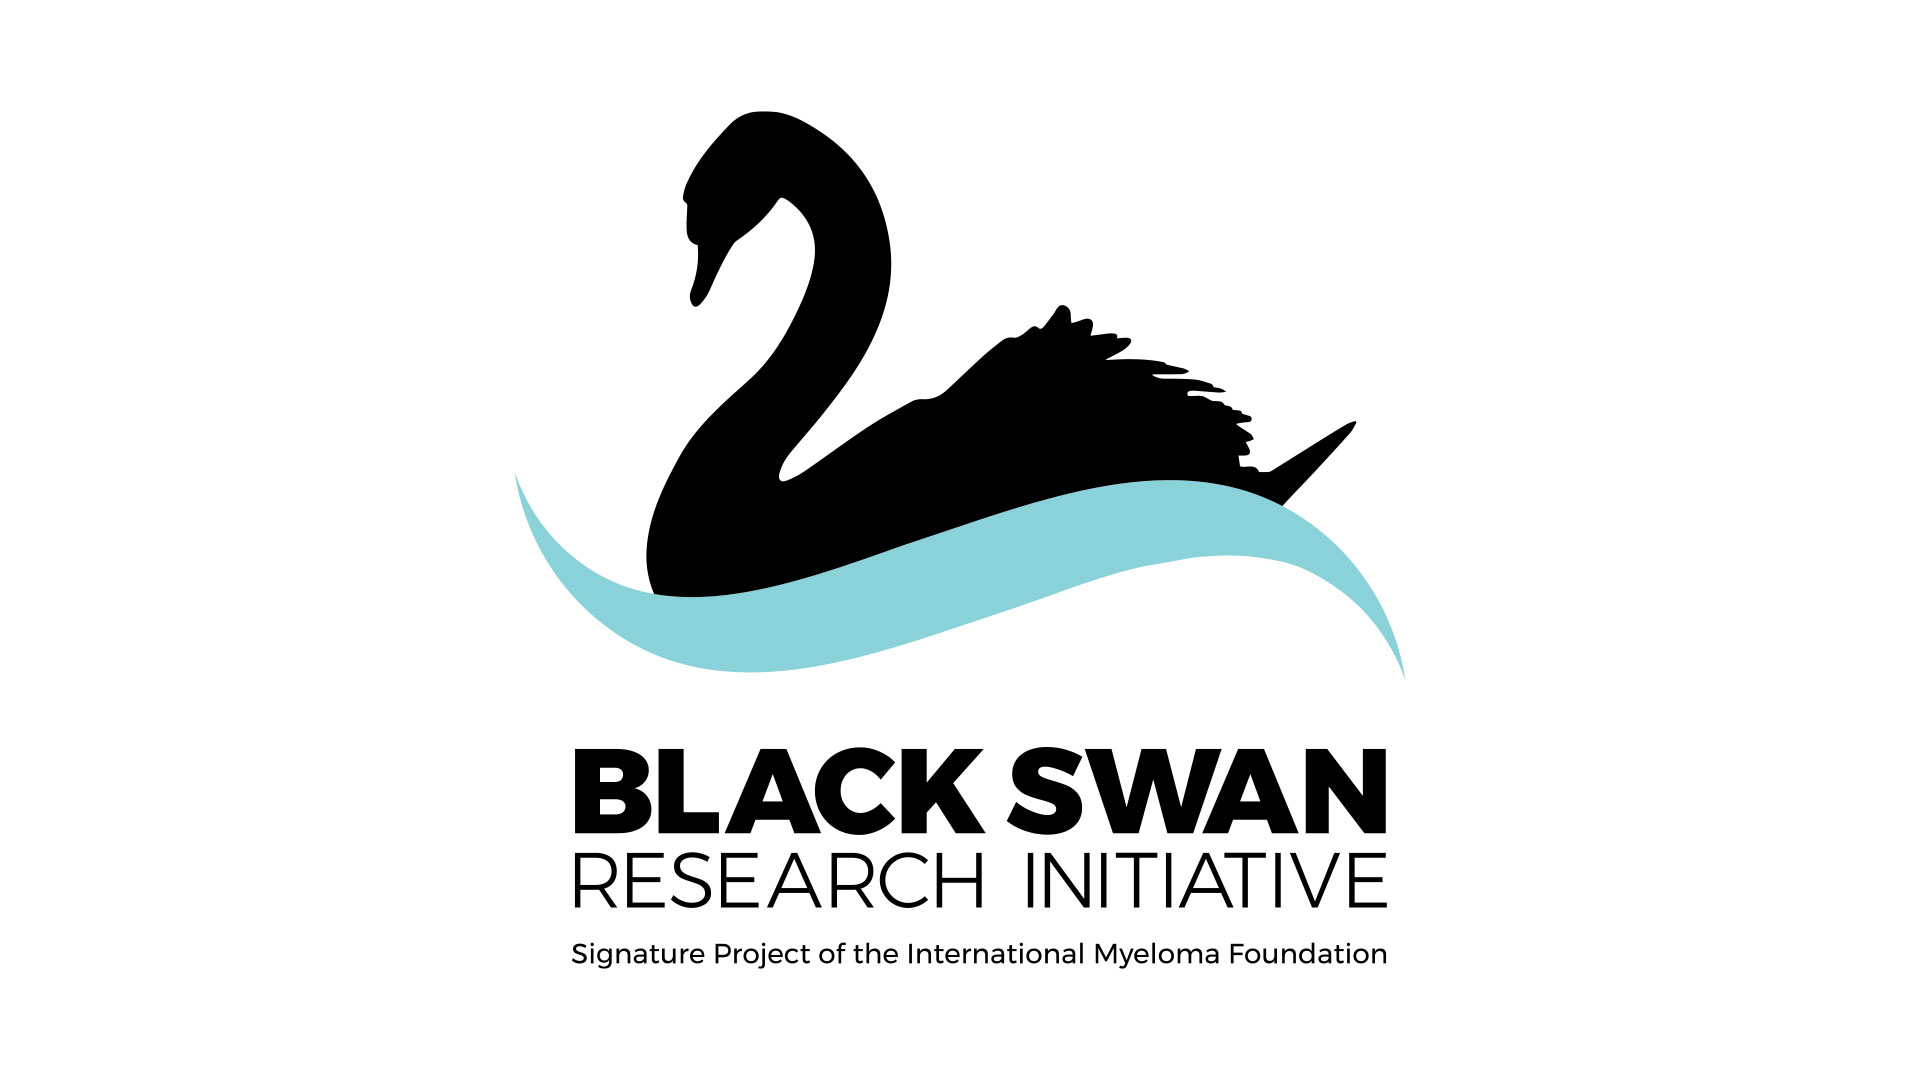 Black Swan Research Initiative logo